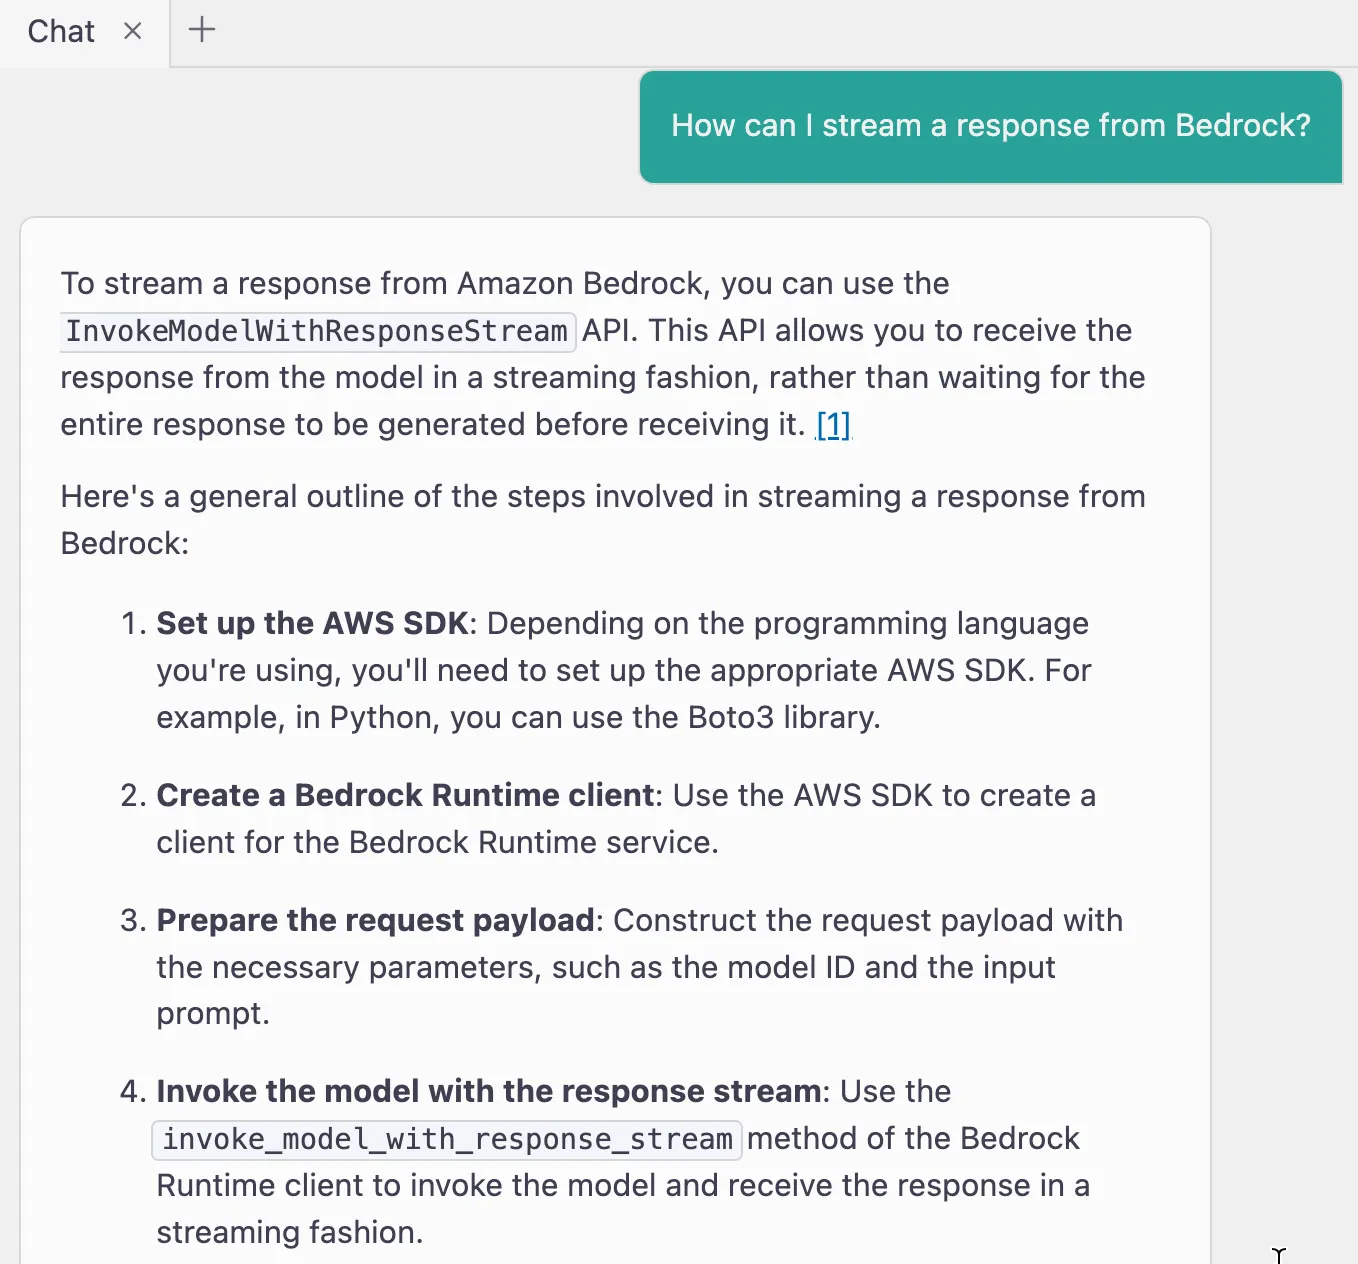 Stream Amazon Bedrock responses for a more responsive UI